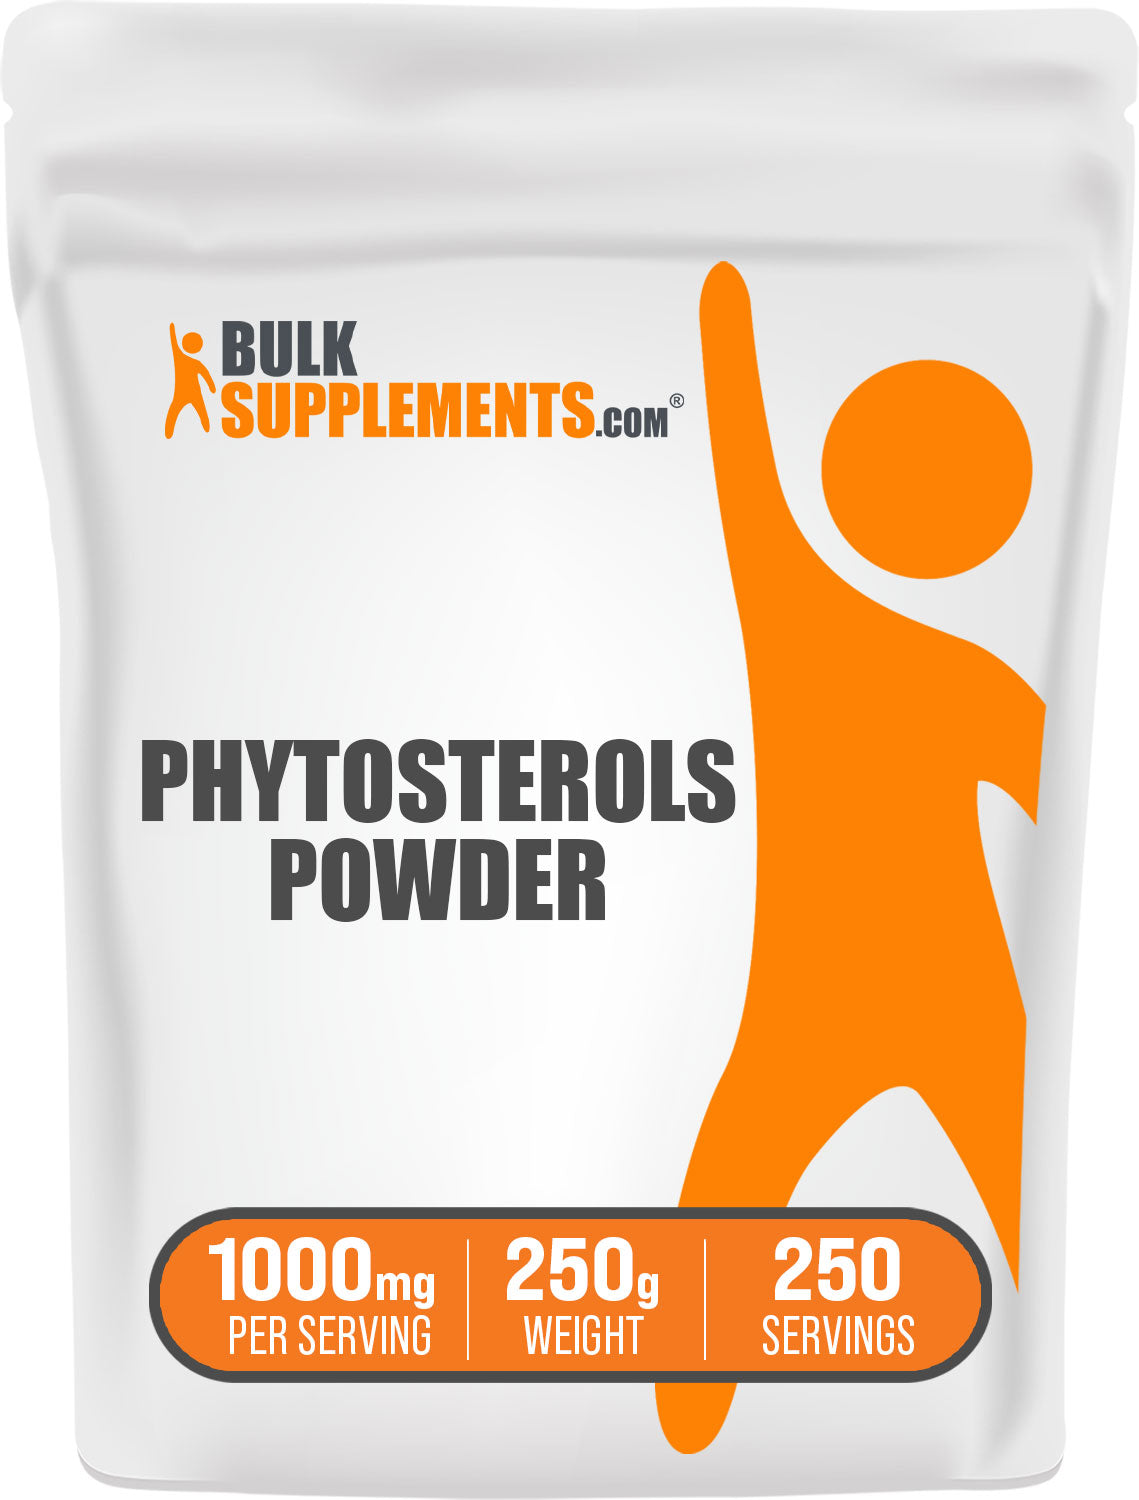 BulkSupplements Phytosterols Powder 250g bag